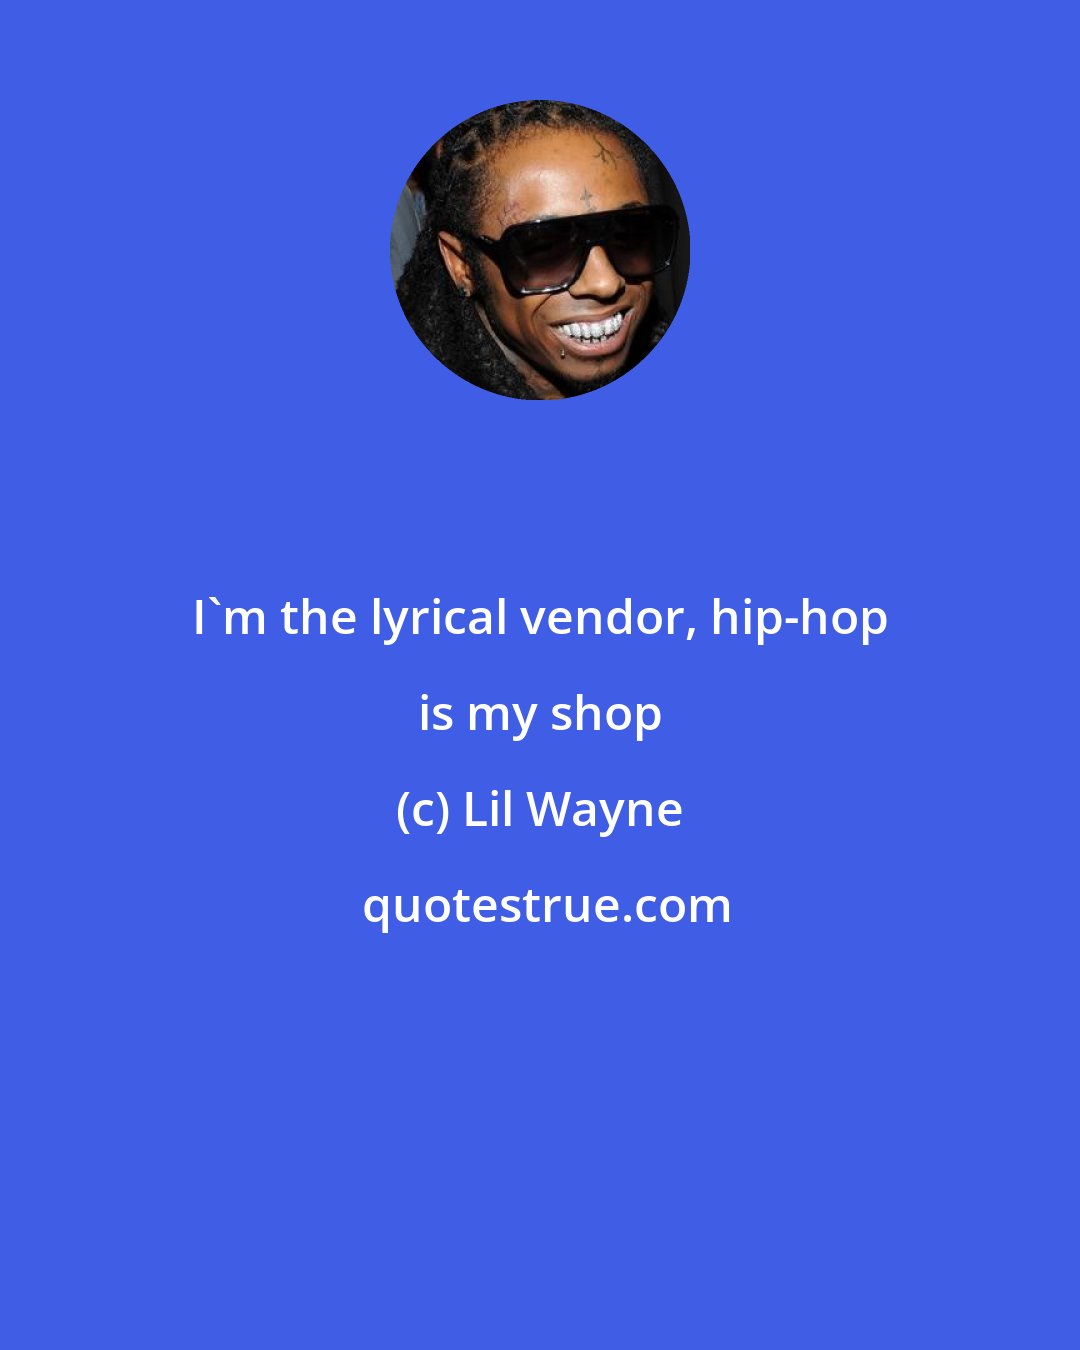 Lil Wayne: I'm the lyrical vendor, hip-hop is my shop